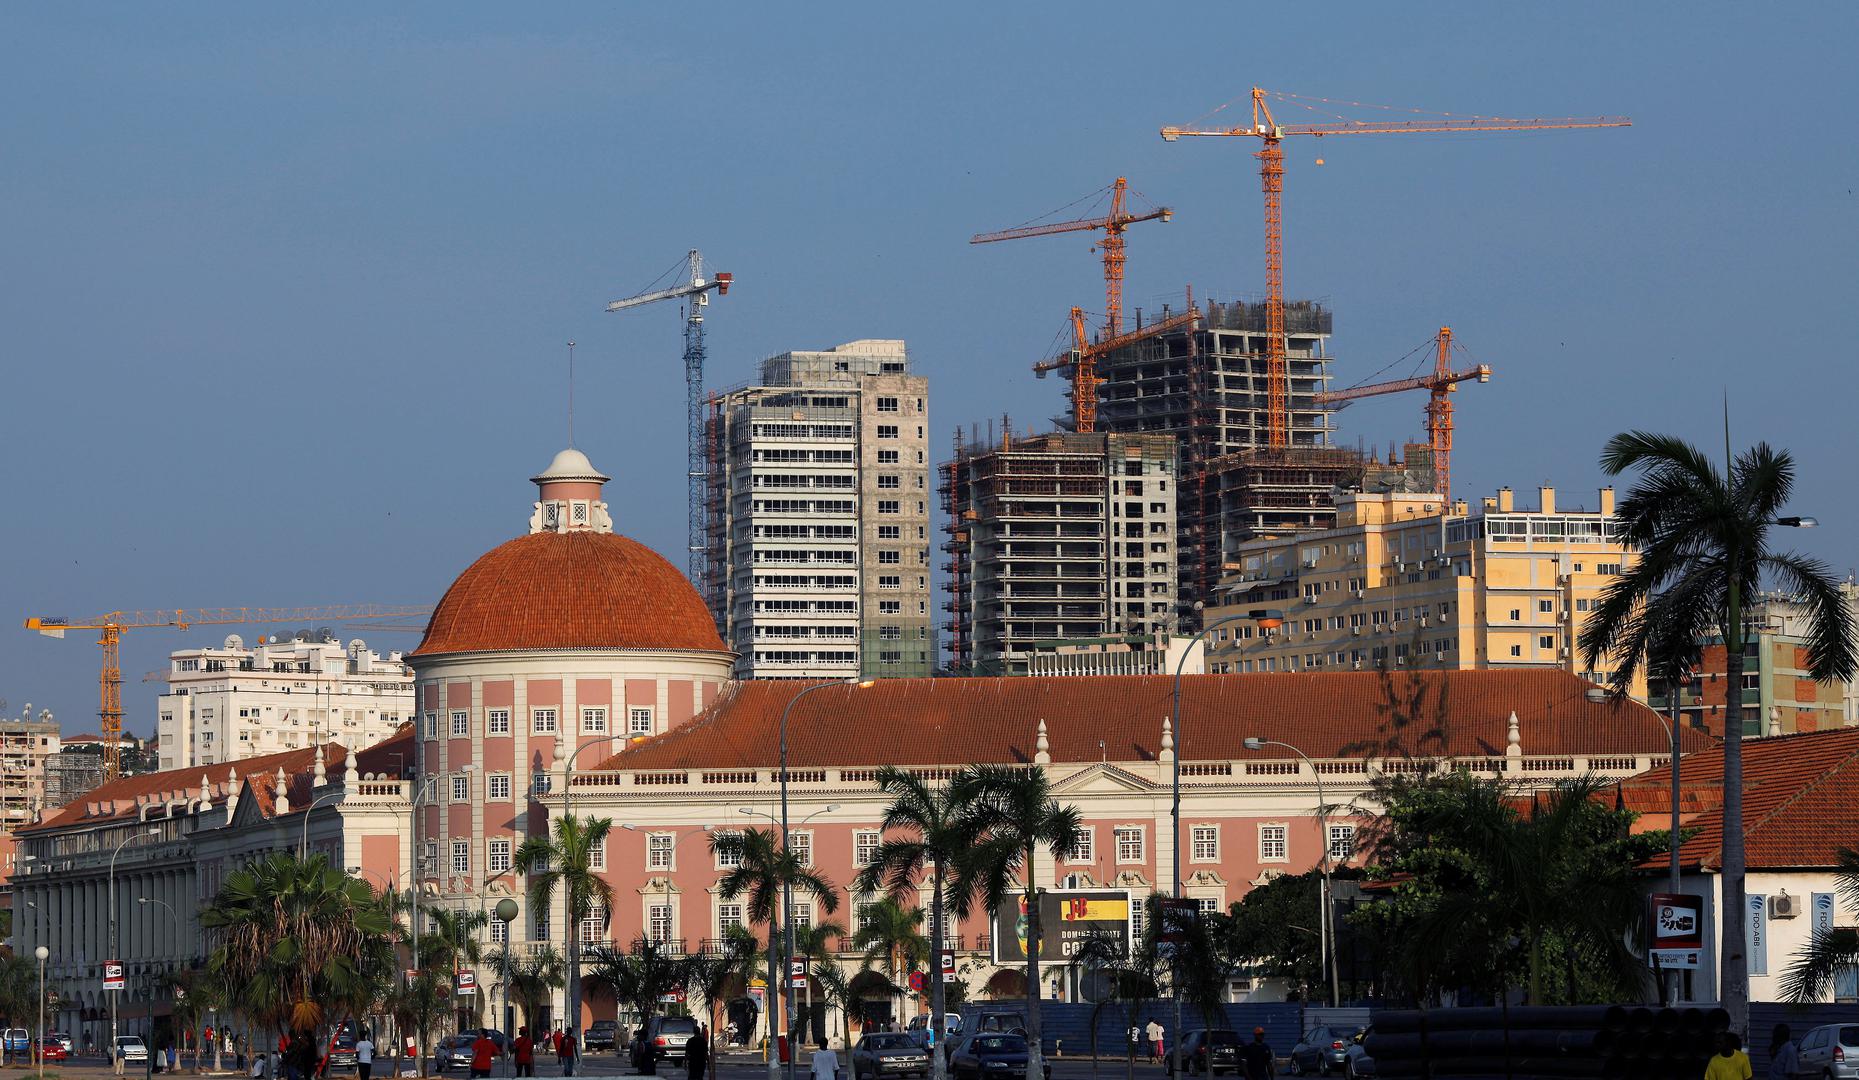 6. Luanda, Angola